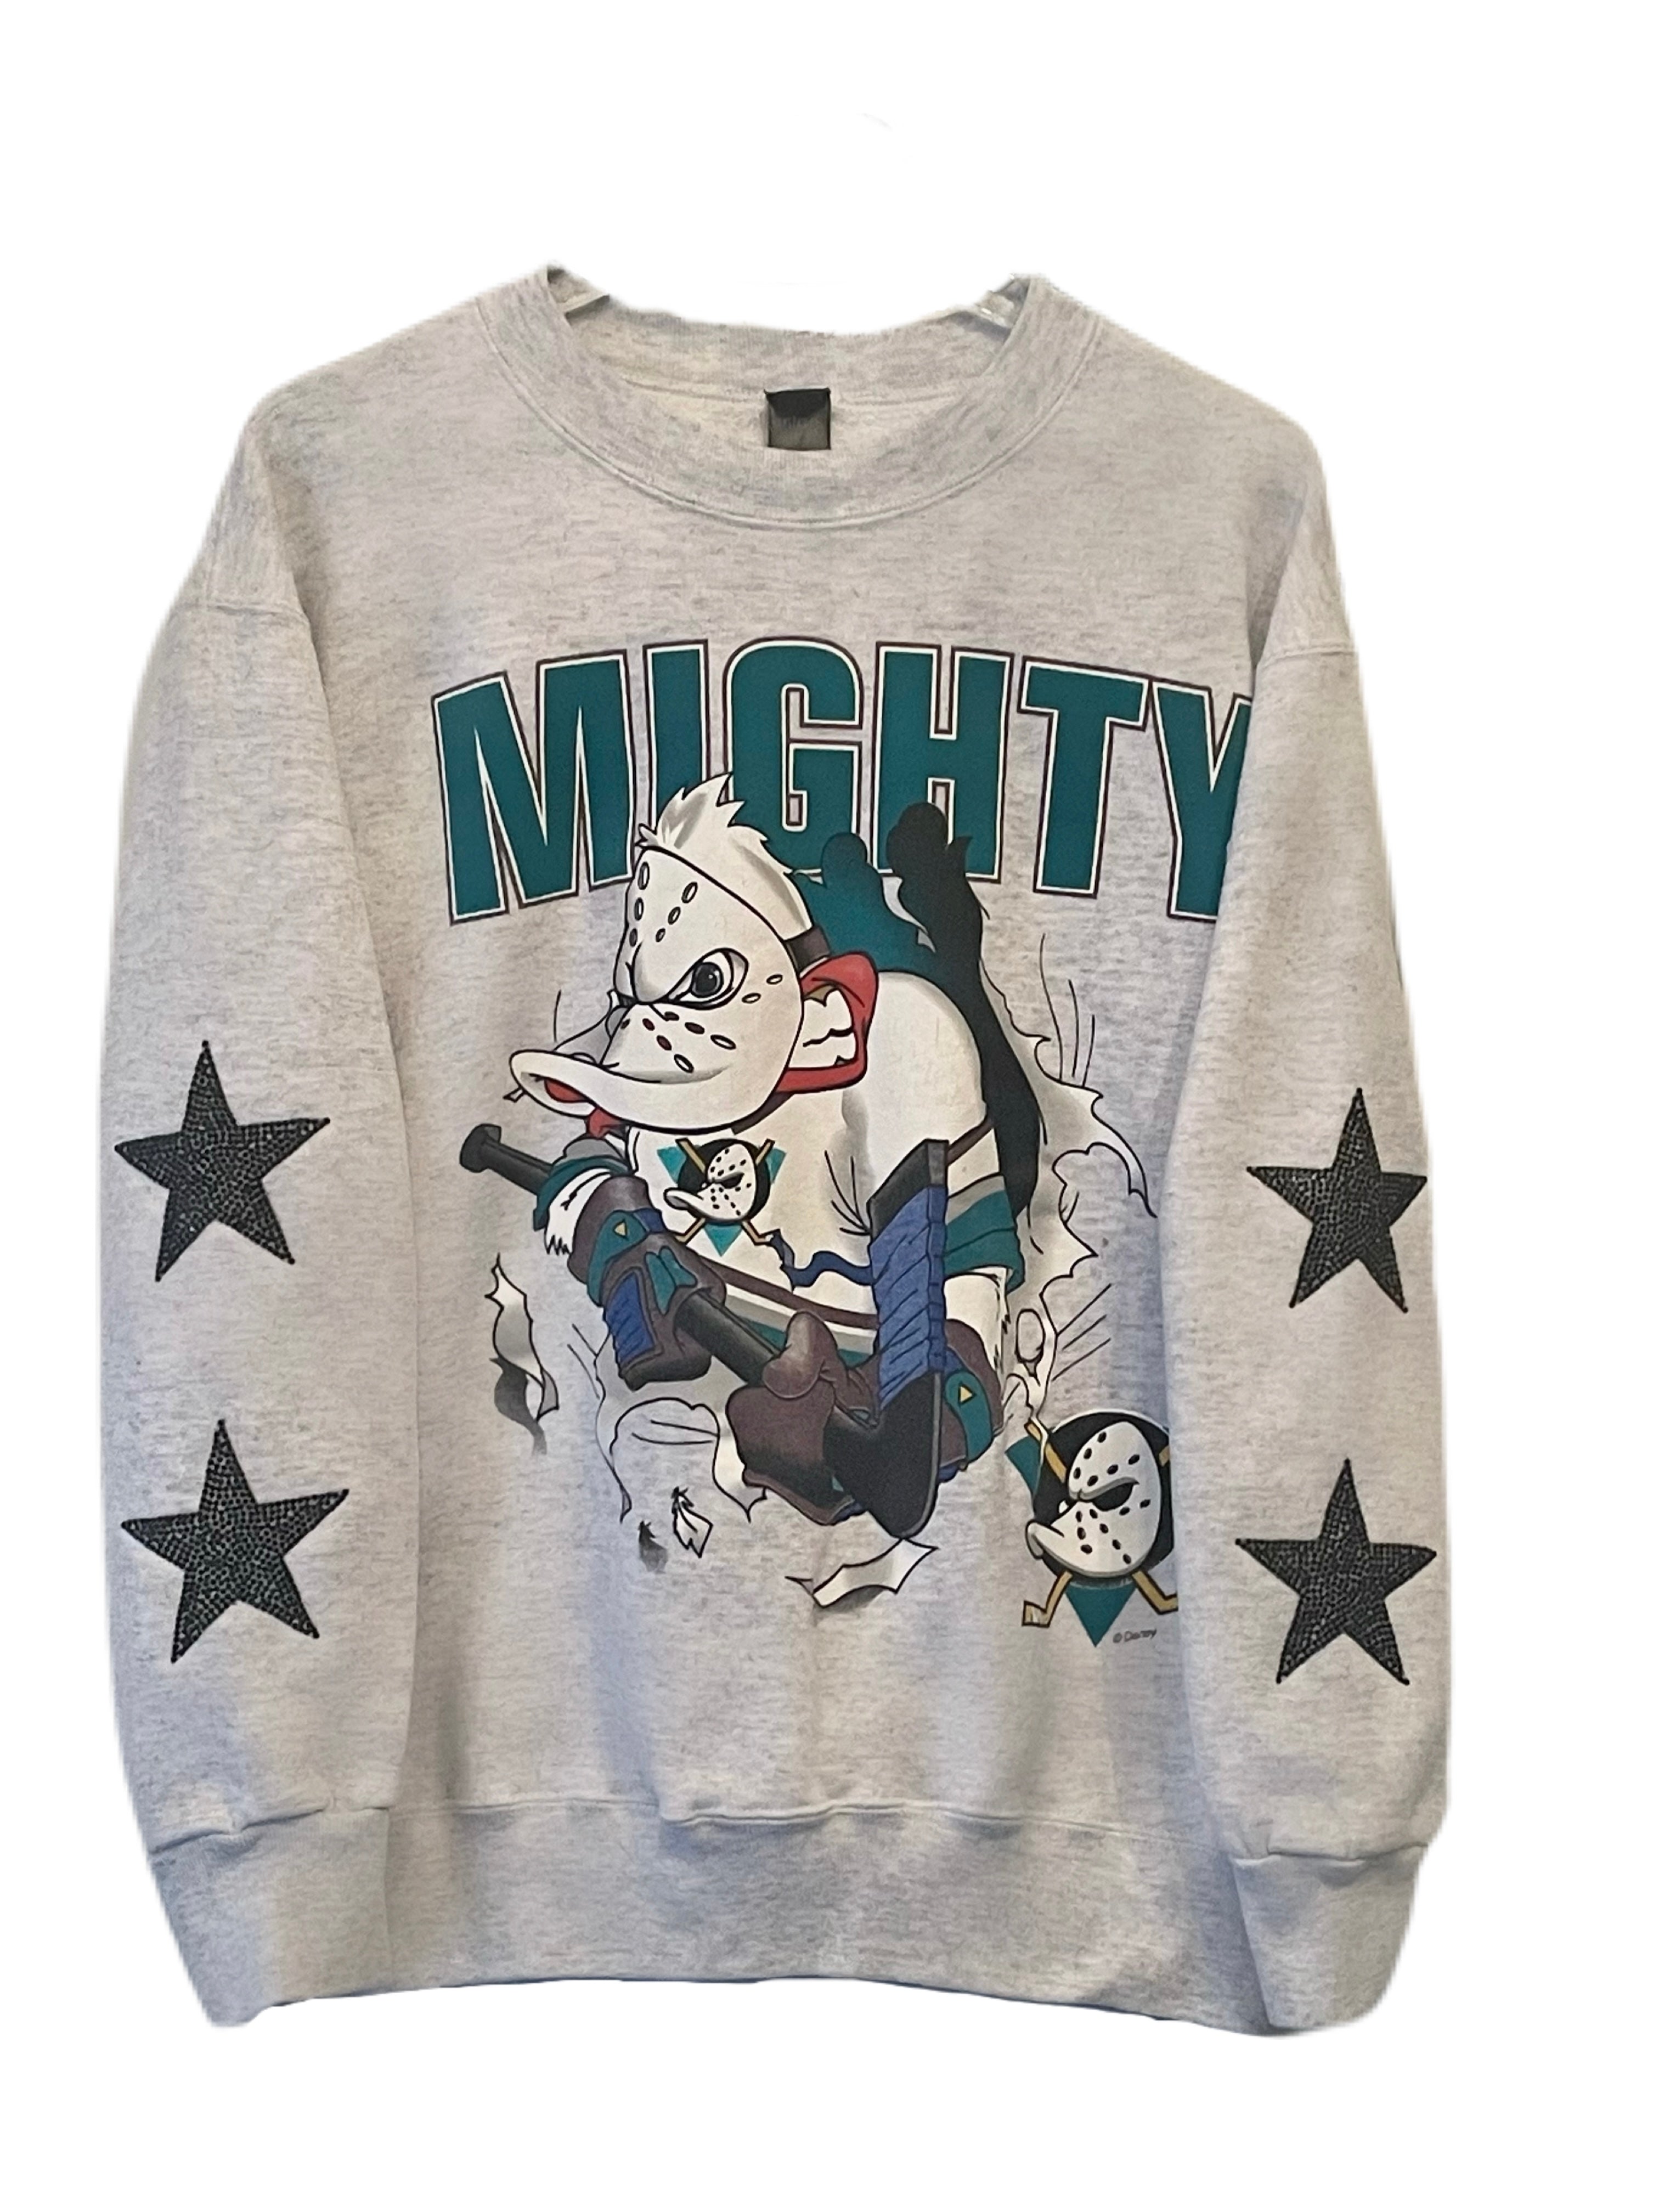 Minnesota Wild, NHL One of a KIND Vintage Sweatshirt with Crystal Star  Design